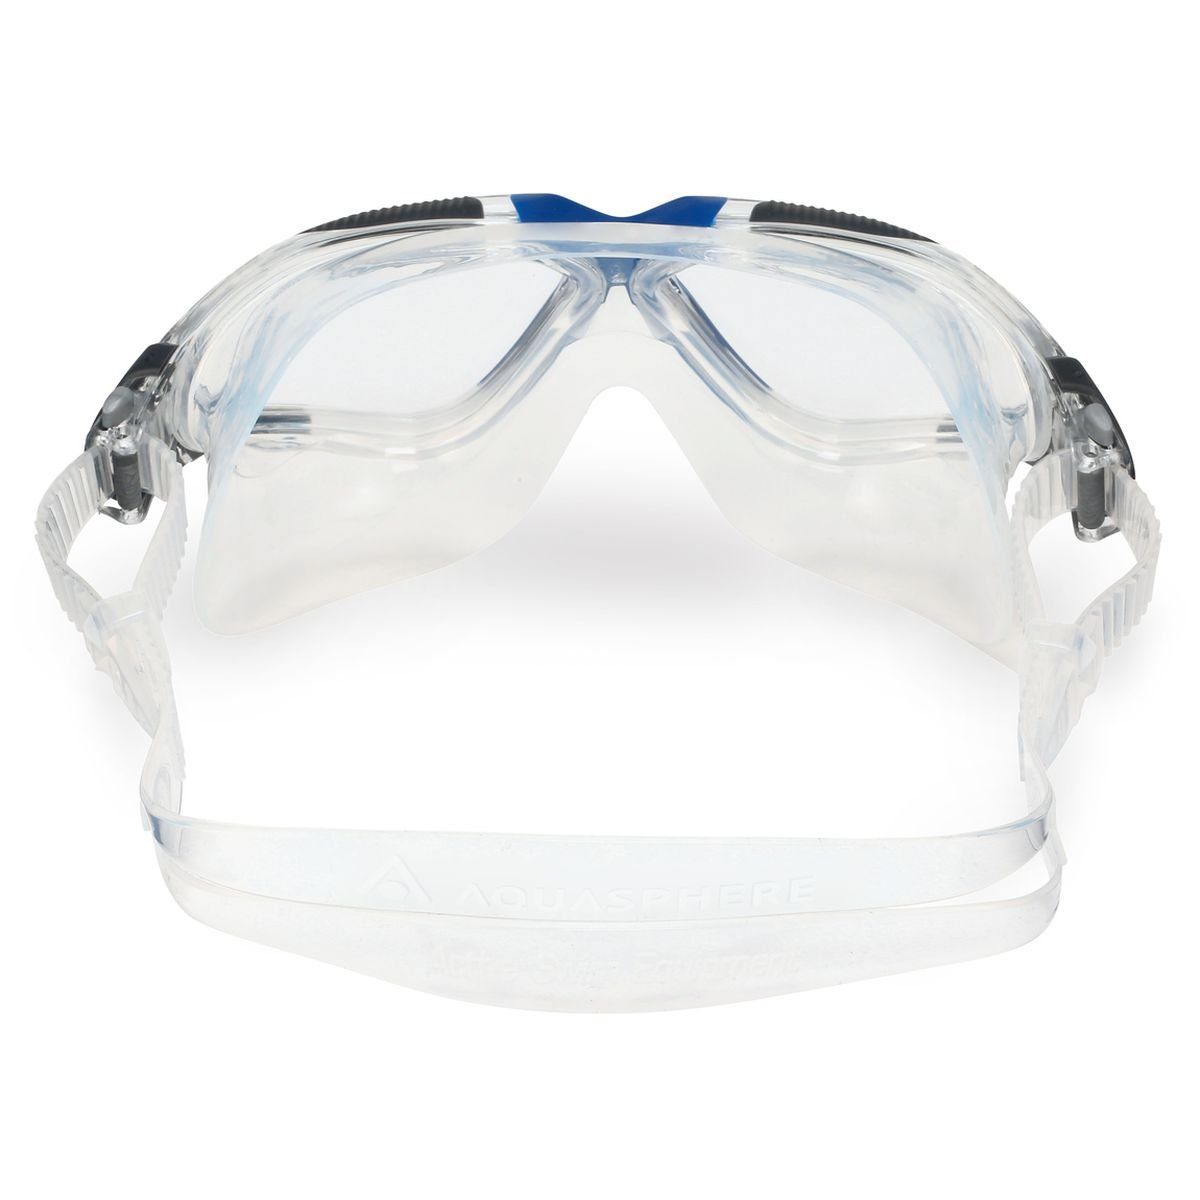 Aquasphere Schwimmbrille Vista Schwimmaske transparent/blau